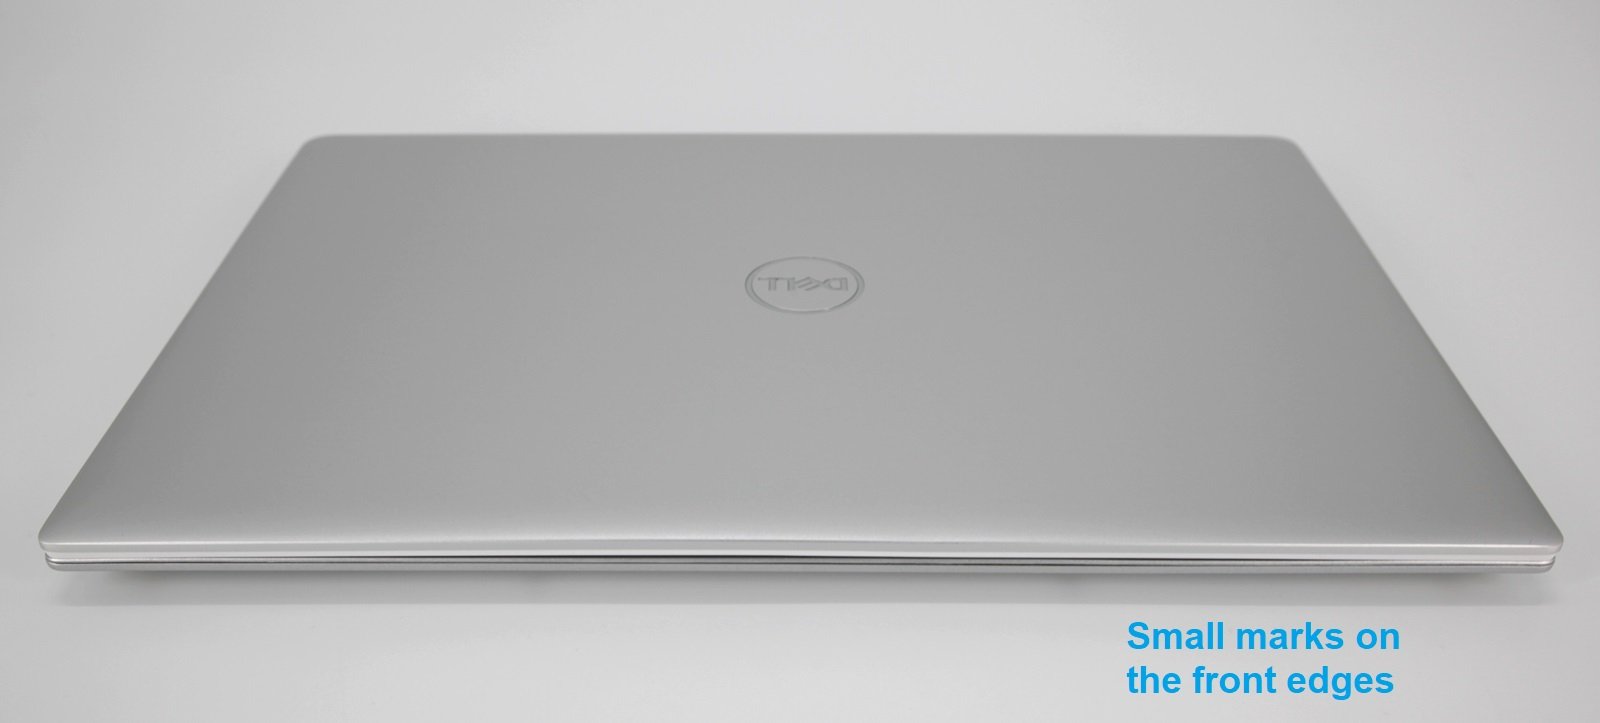 Dell Inspiron 5590 Laptop; i7-10510U, 8GB RAM, 512GB SSD, Nvidia MX250 - CruiseTech